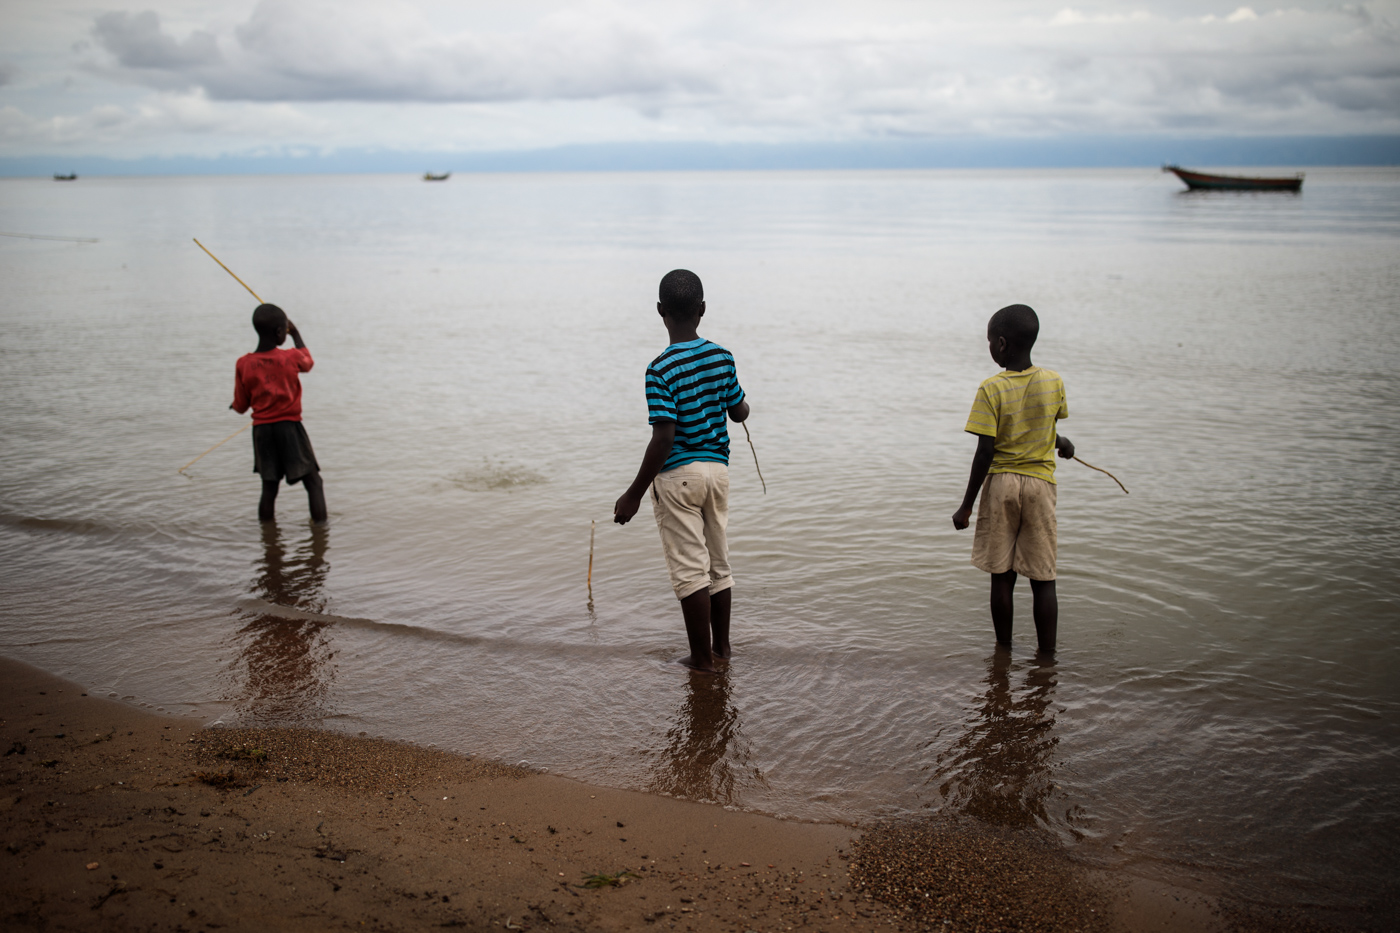  SEBAGORO, UGANDA: Local children play with home-made fishing rods on the banks of Lake Albert on April 4, 2018. 